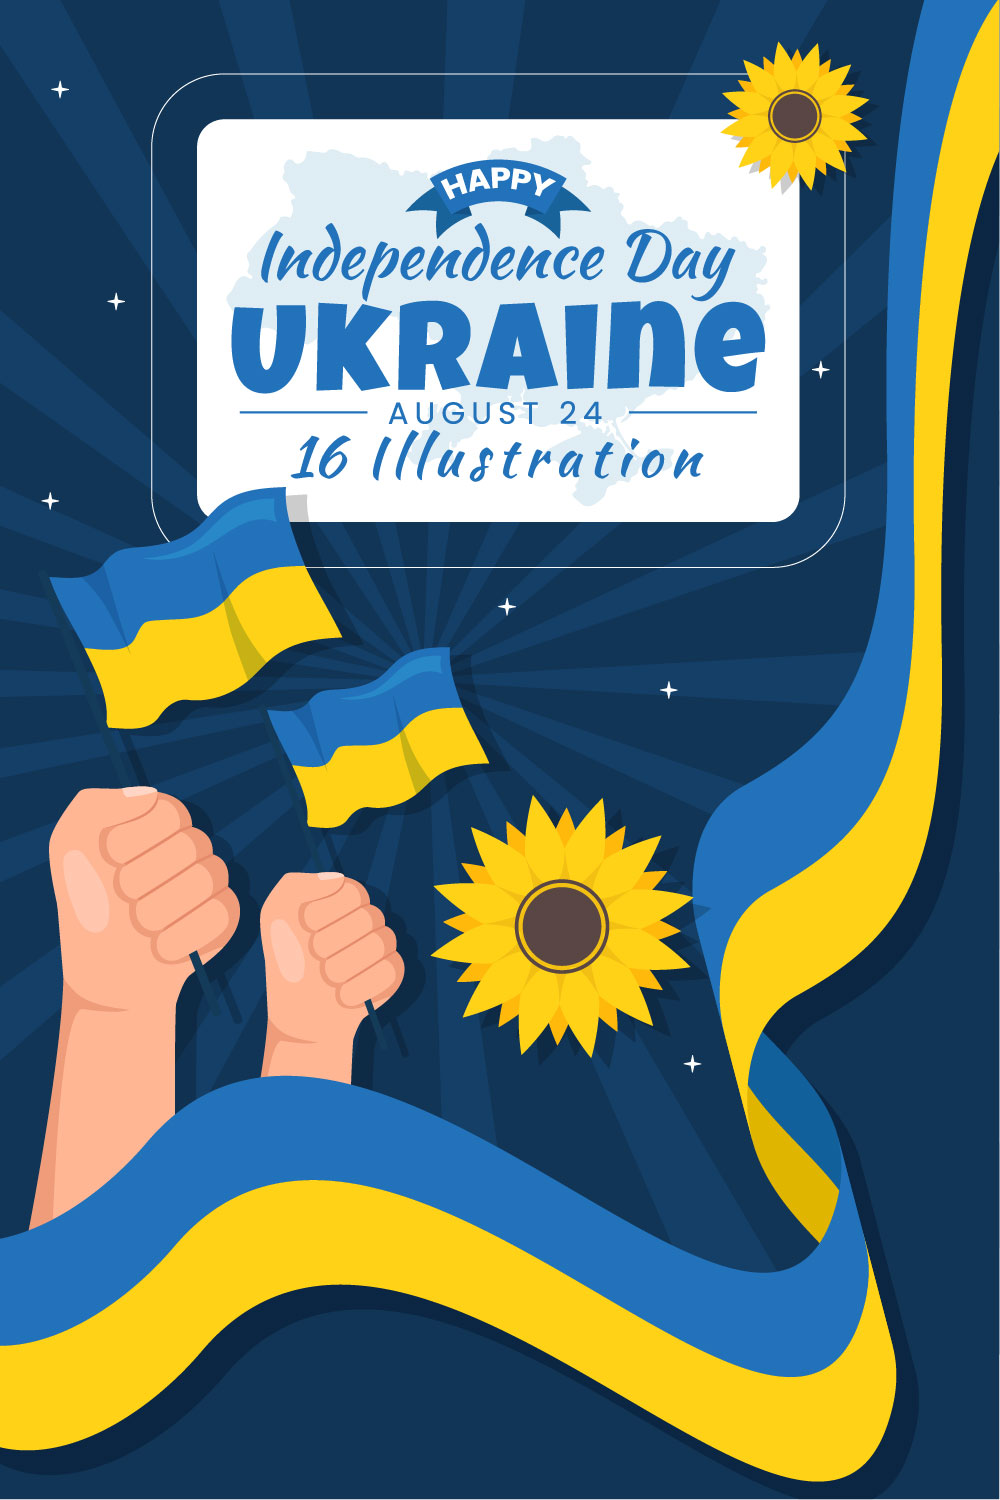 16 Ukraine Independence Day Illustration pinterest preview image.